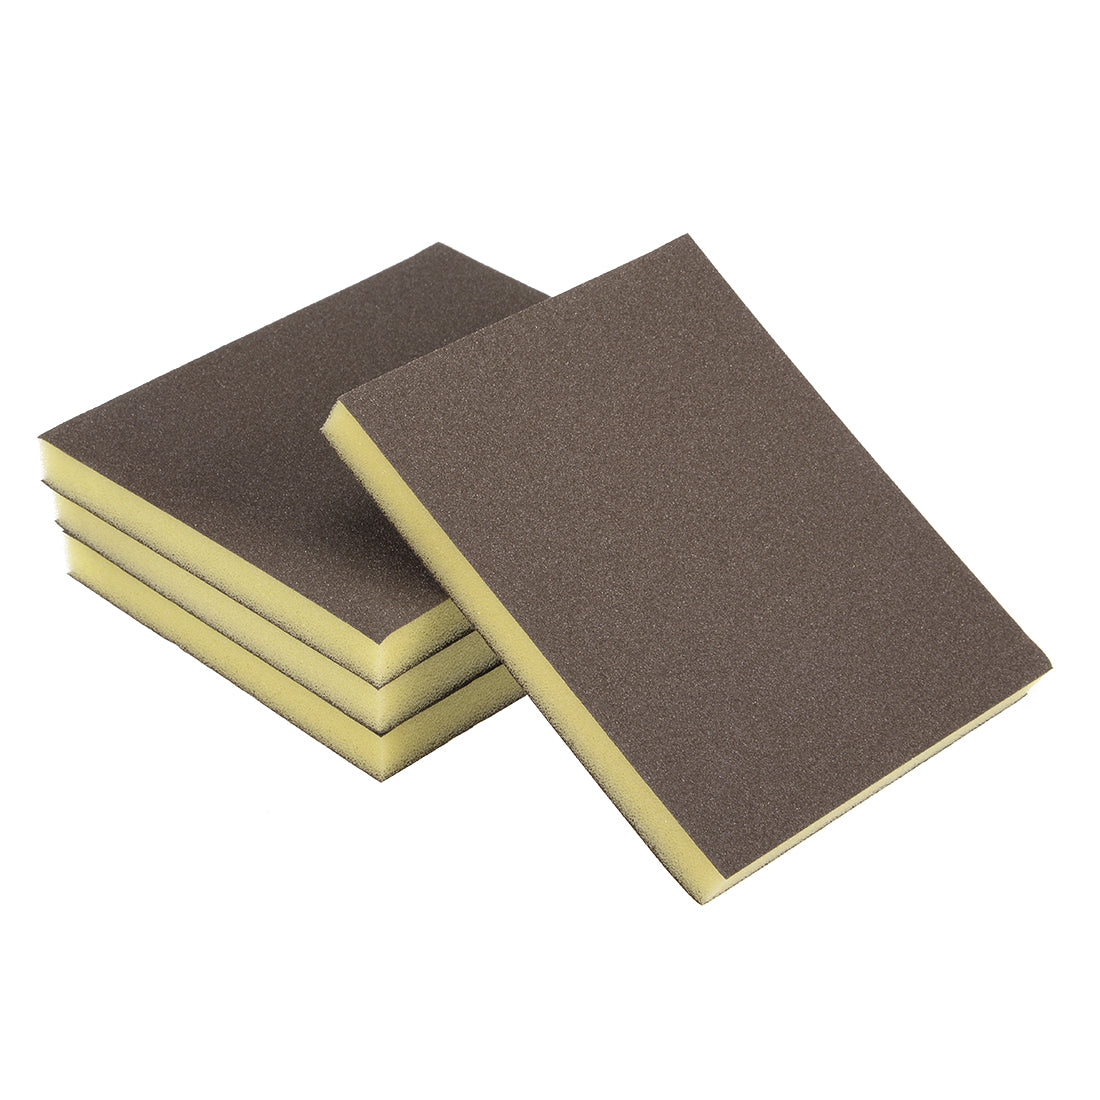 uxcell Uxcell Sanding Sponge, Medium Grit 150 Grit Sanding Block Pad, 4.72" x 3.86" x 0.47" Size Brown 4pcs